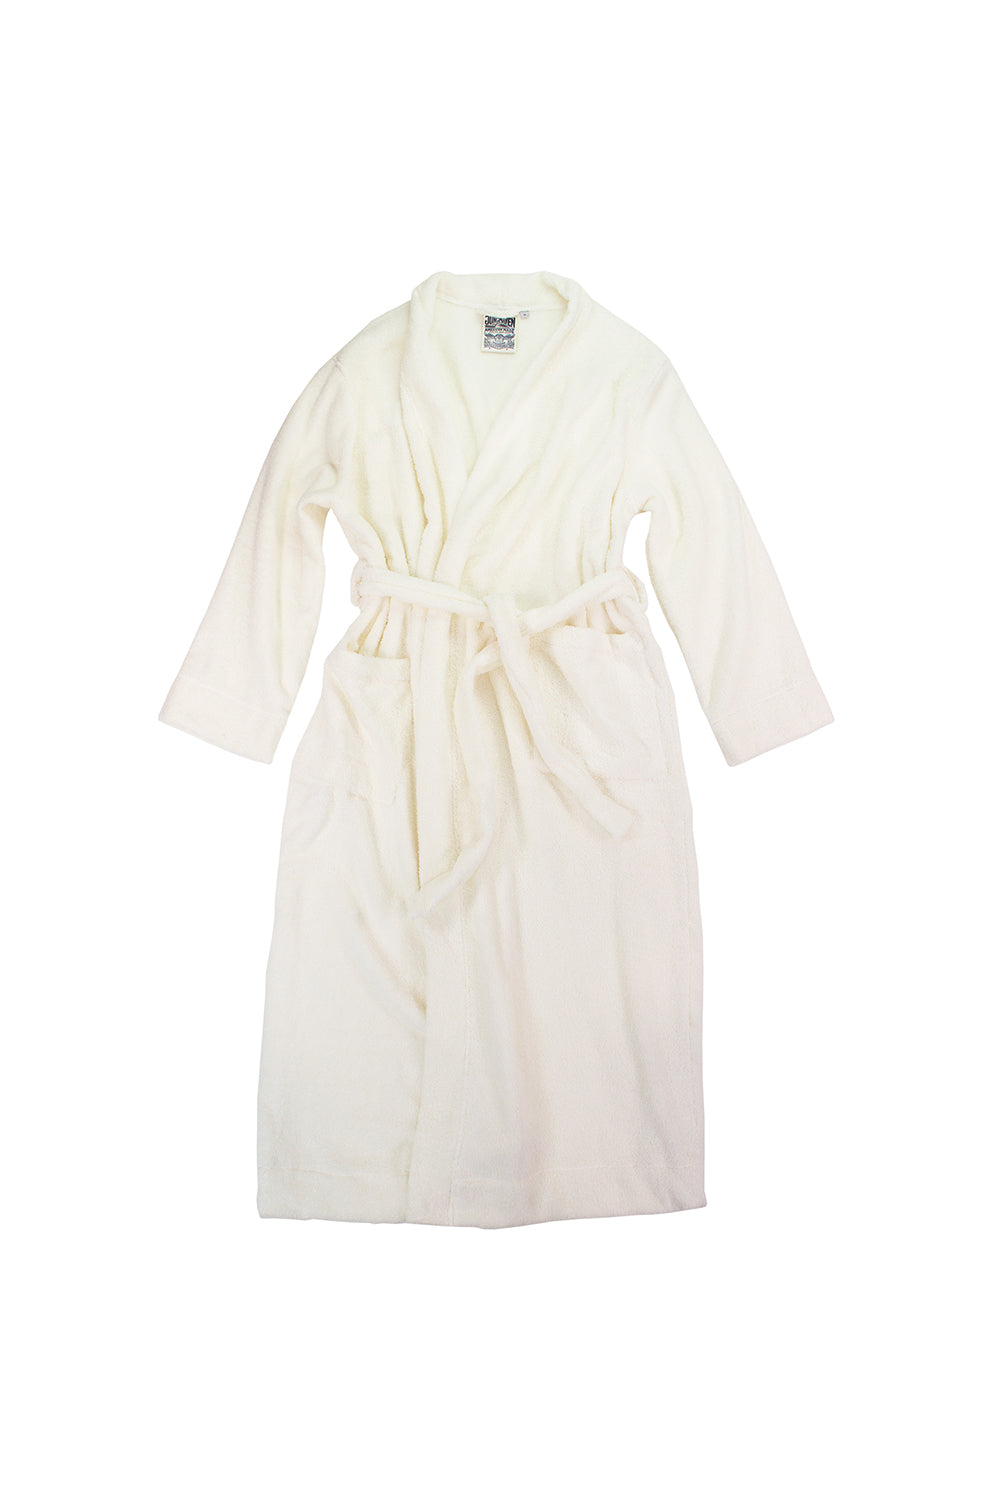 1888 Mills 100% Cotton Bath Robe | Bathrobes For Women